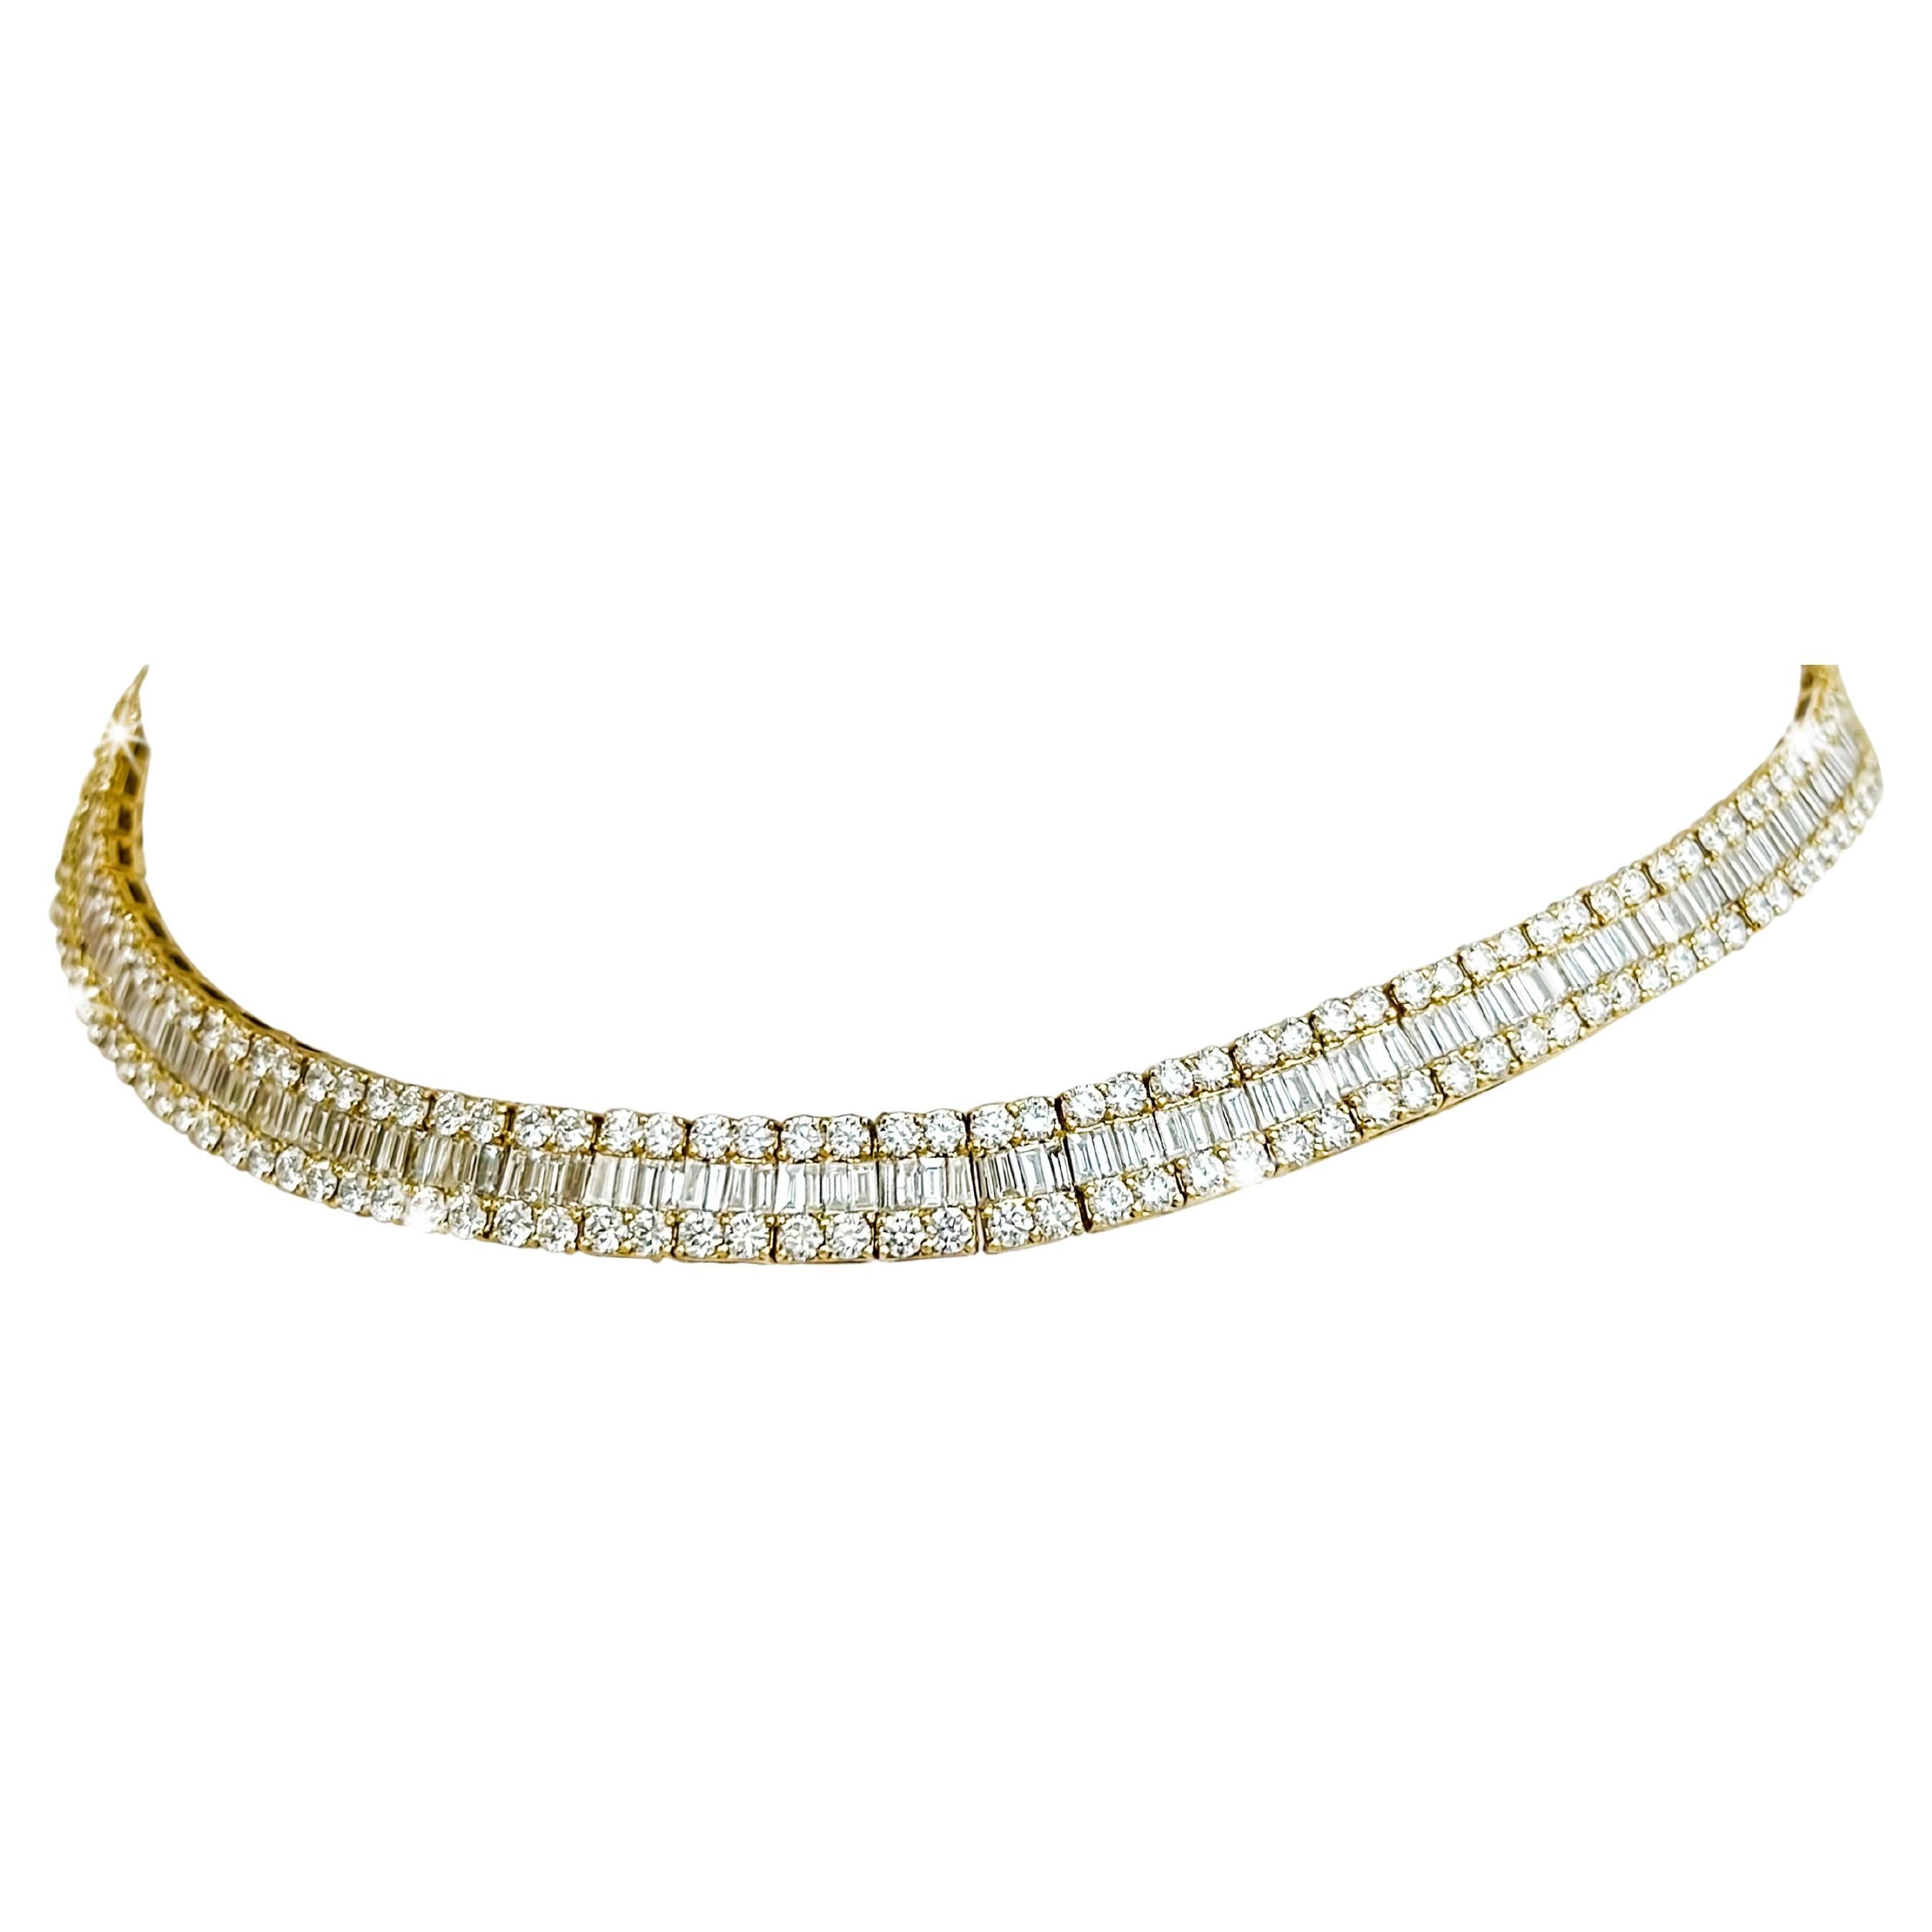 Eleanor's Diamond Necklace